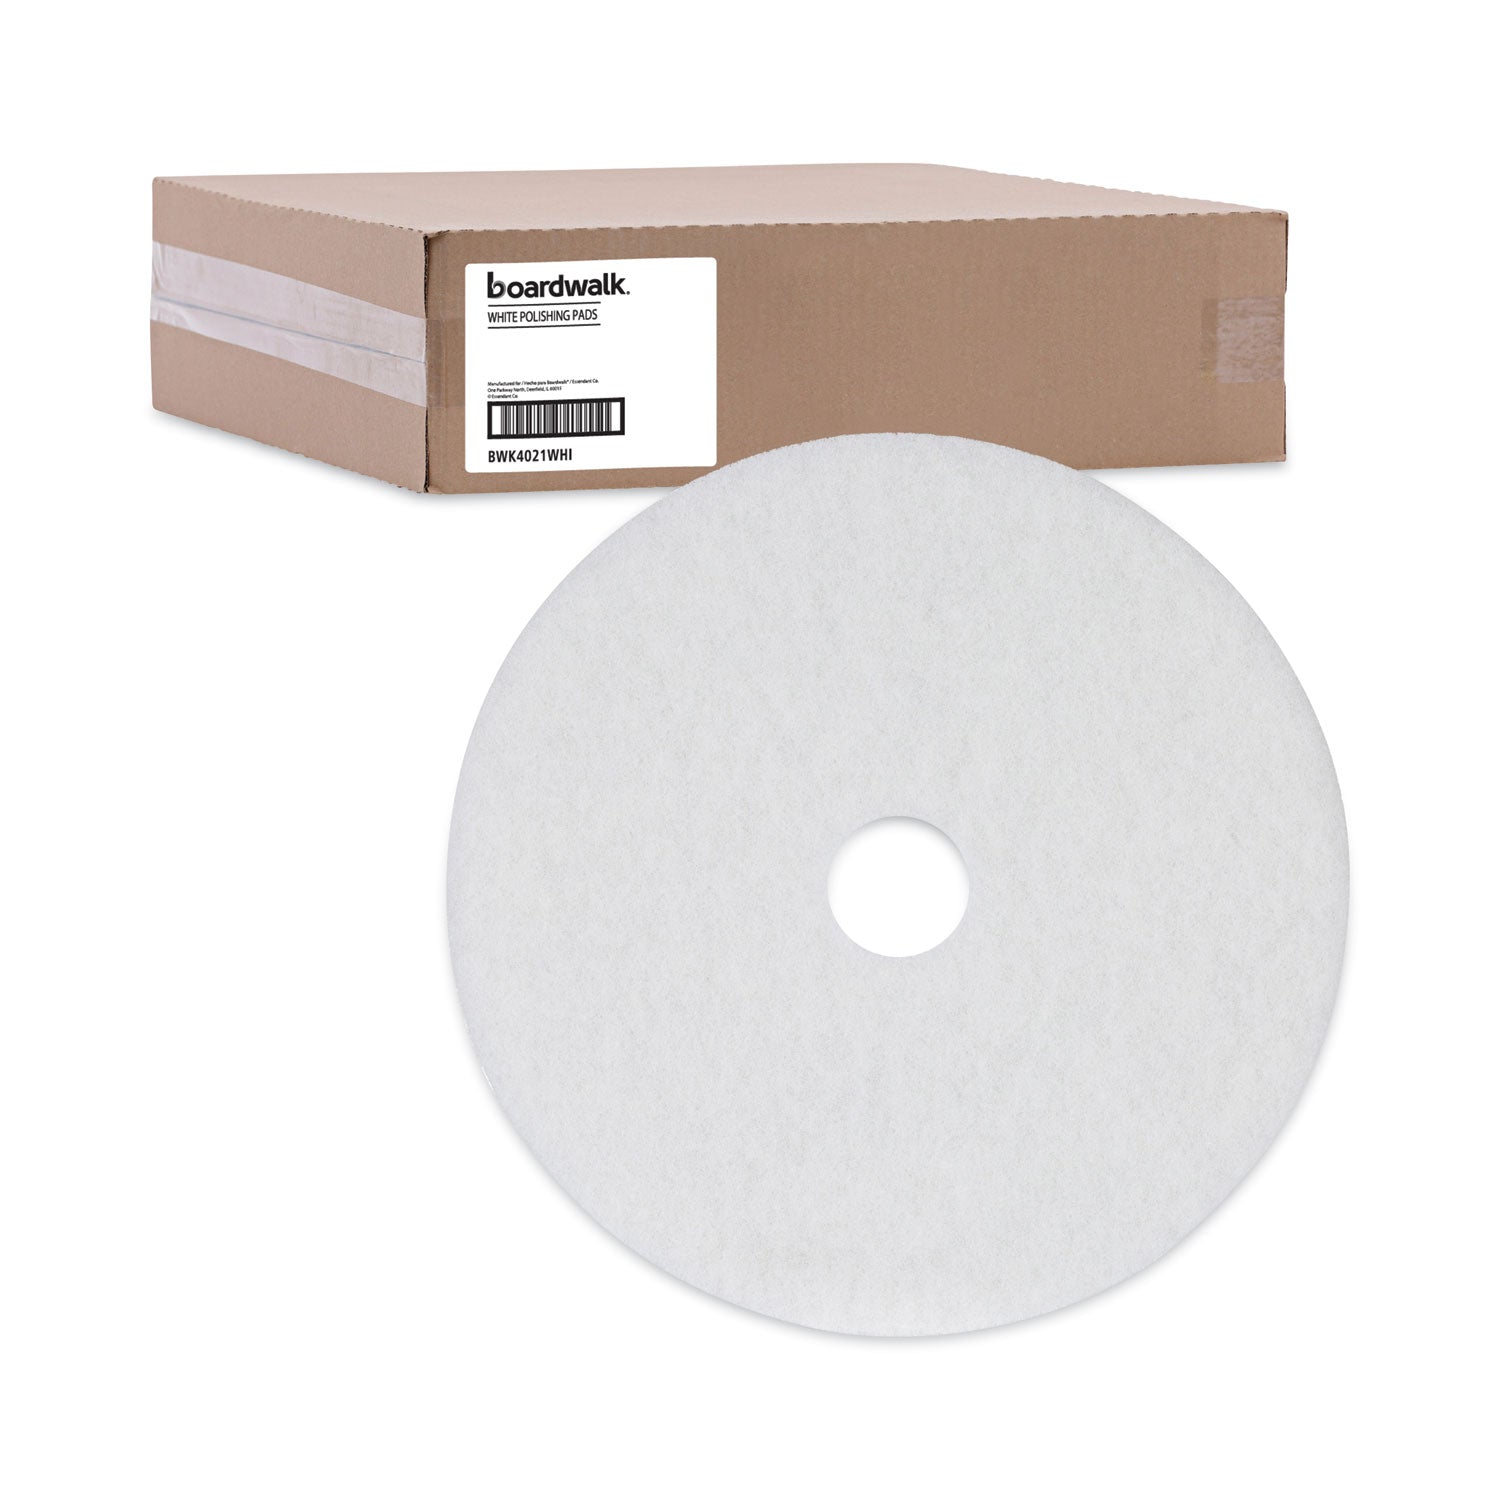 polishing-floor-pads-21-diameter-white-5-carton_bwk4021whi - 5